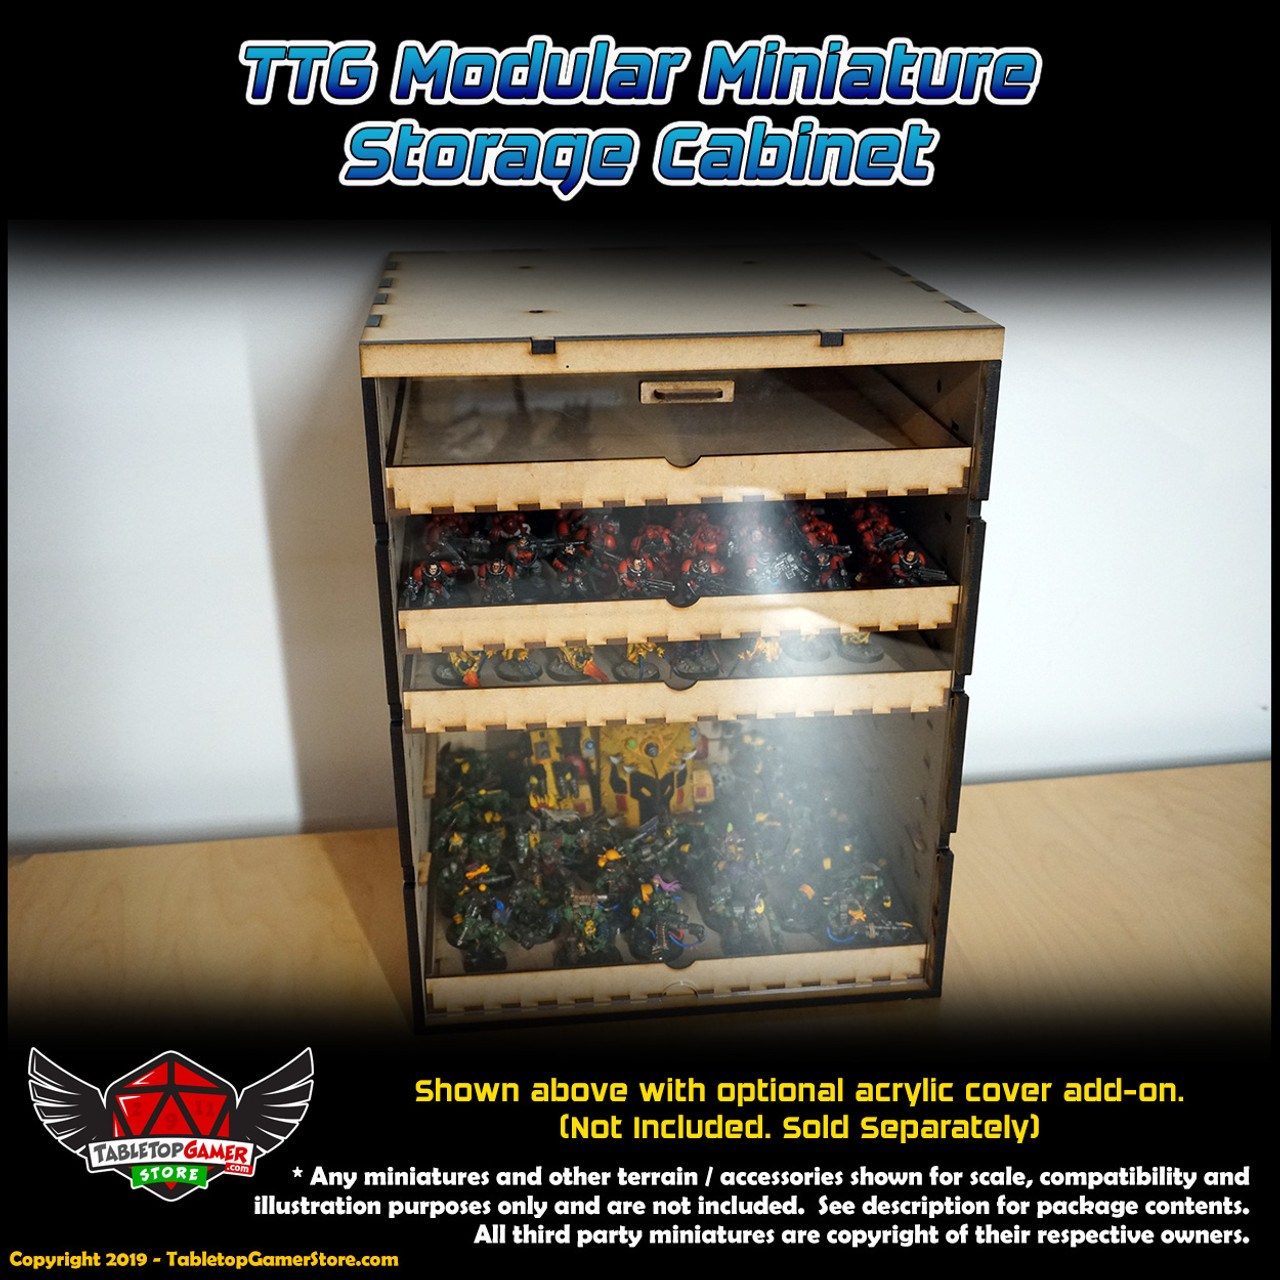 TTG Modular Miniature Storage Cabinet